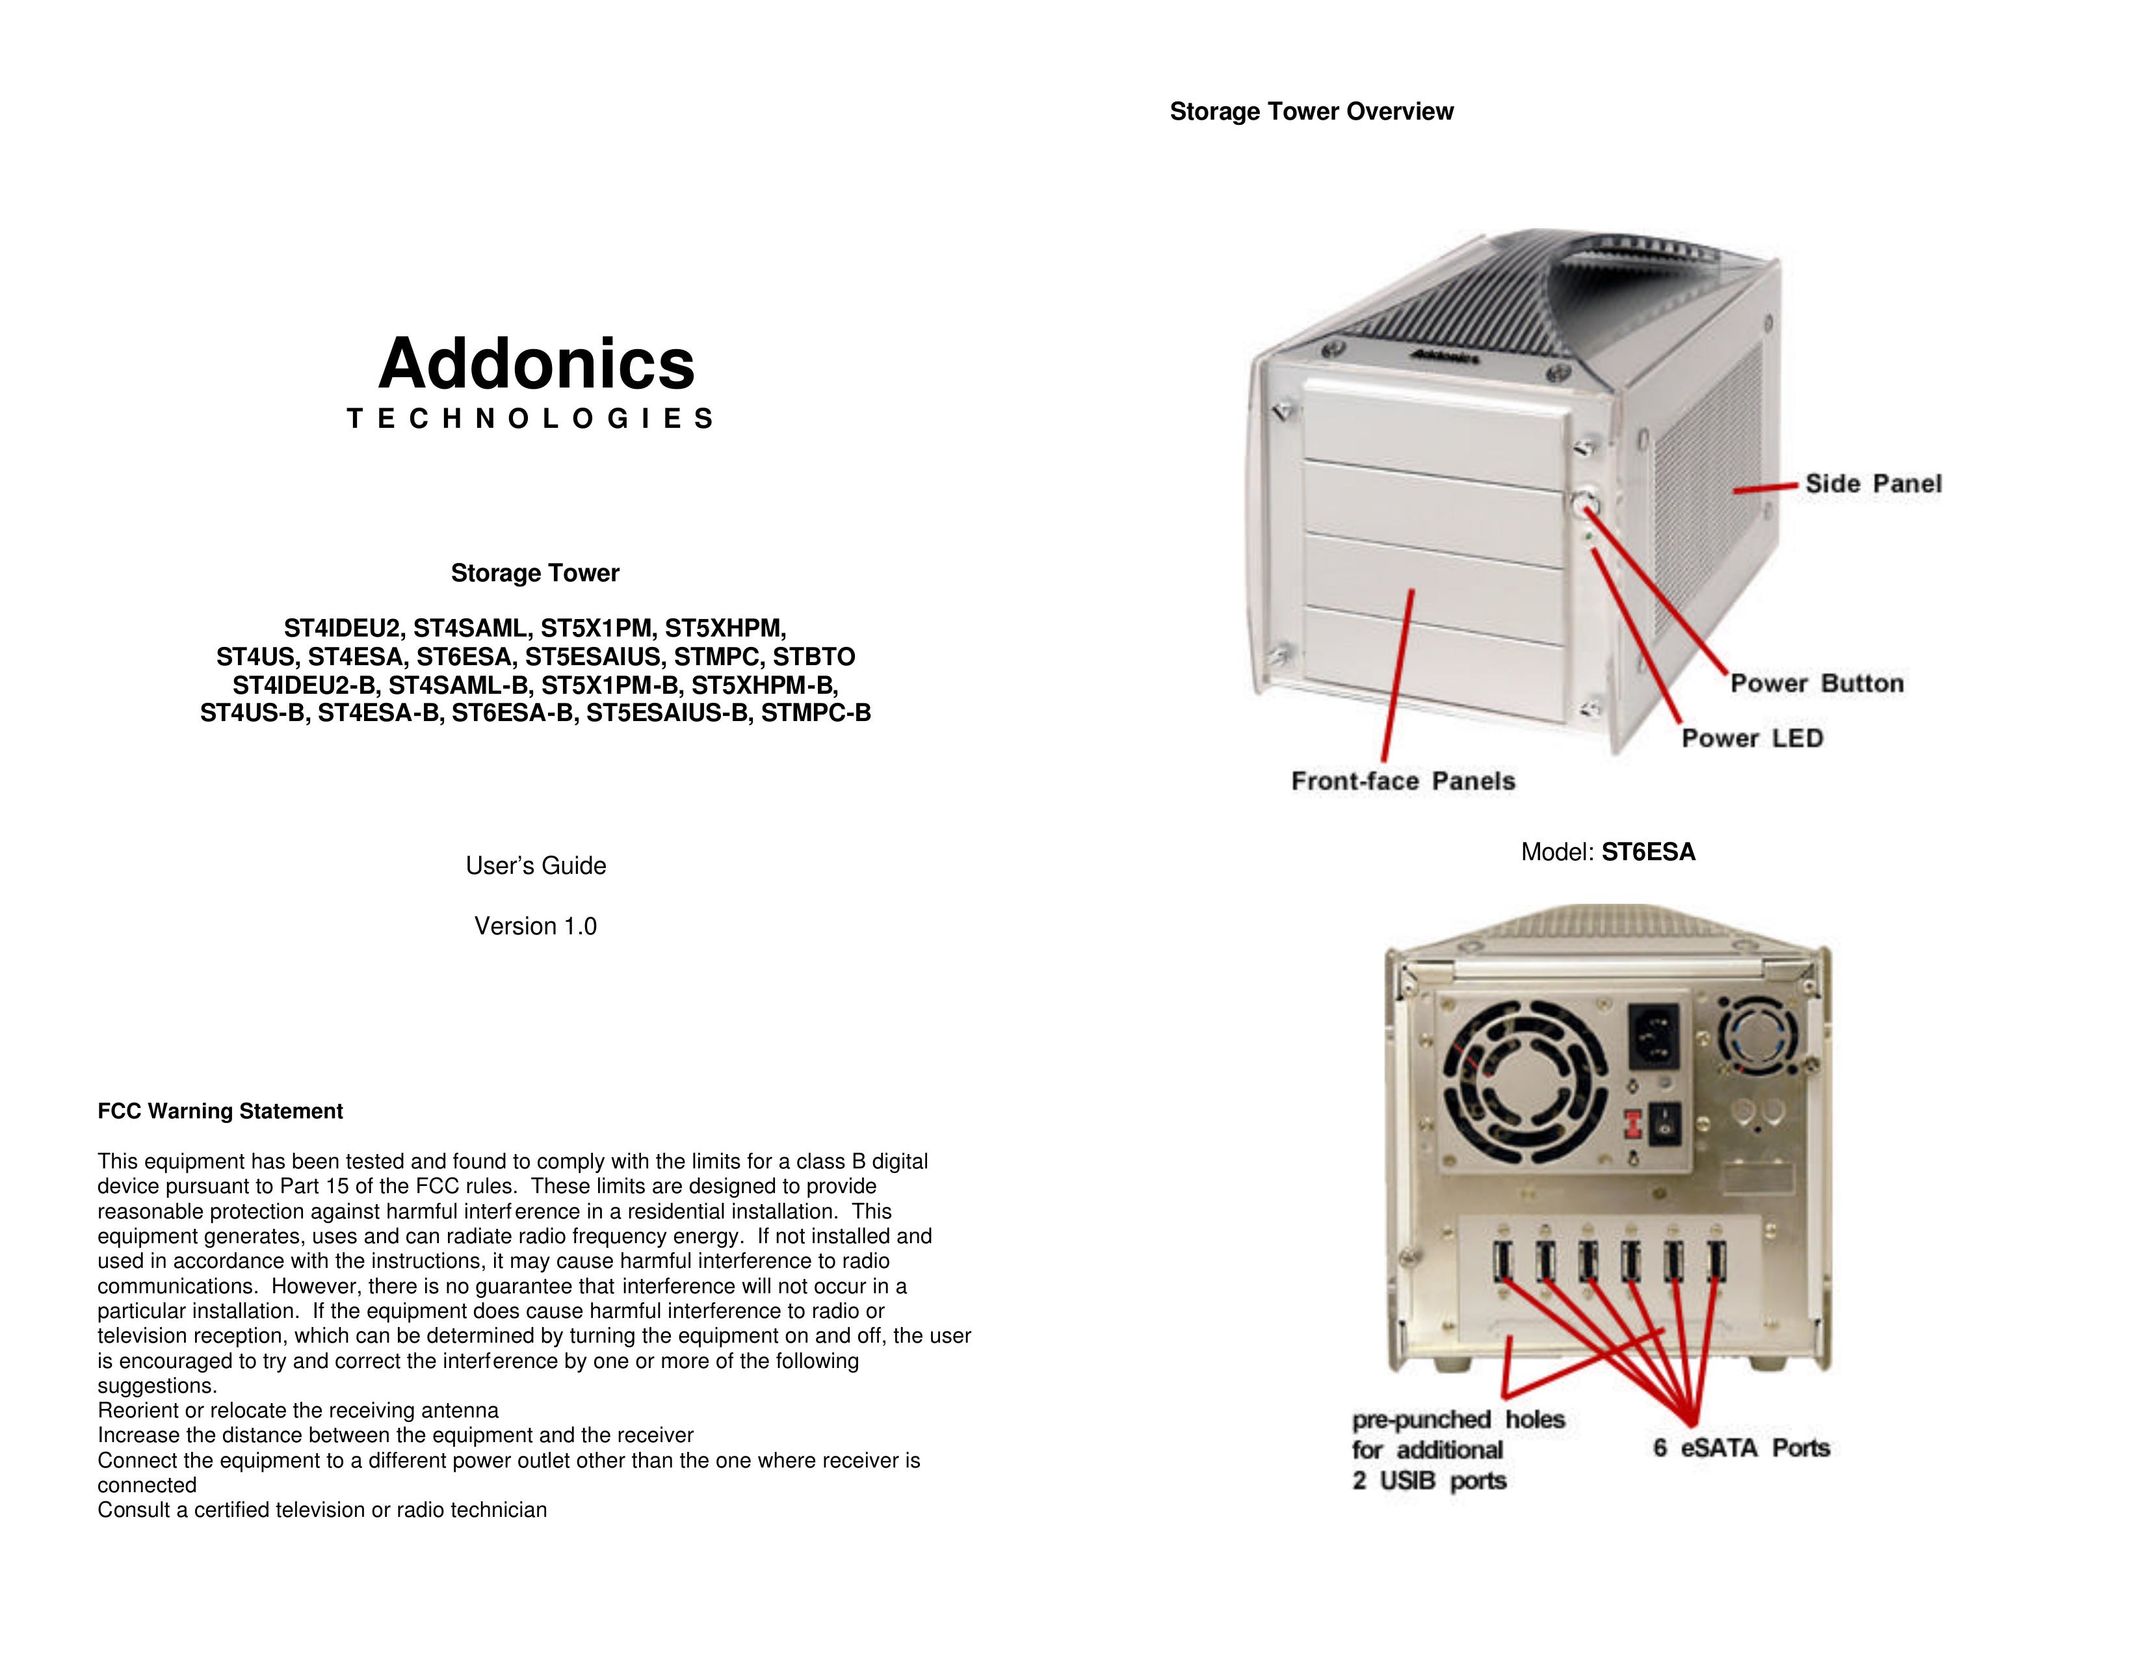 Addonics Technologies ST4IDEU2 Portable Media Storage User Manual